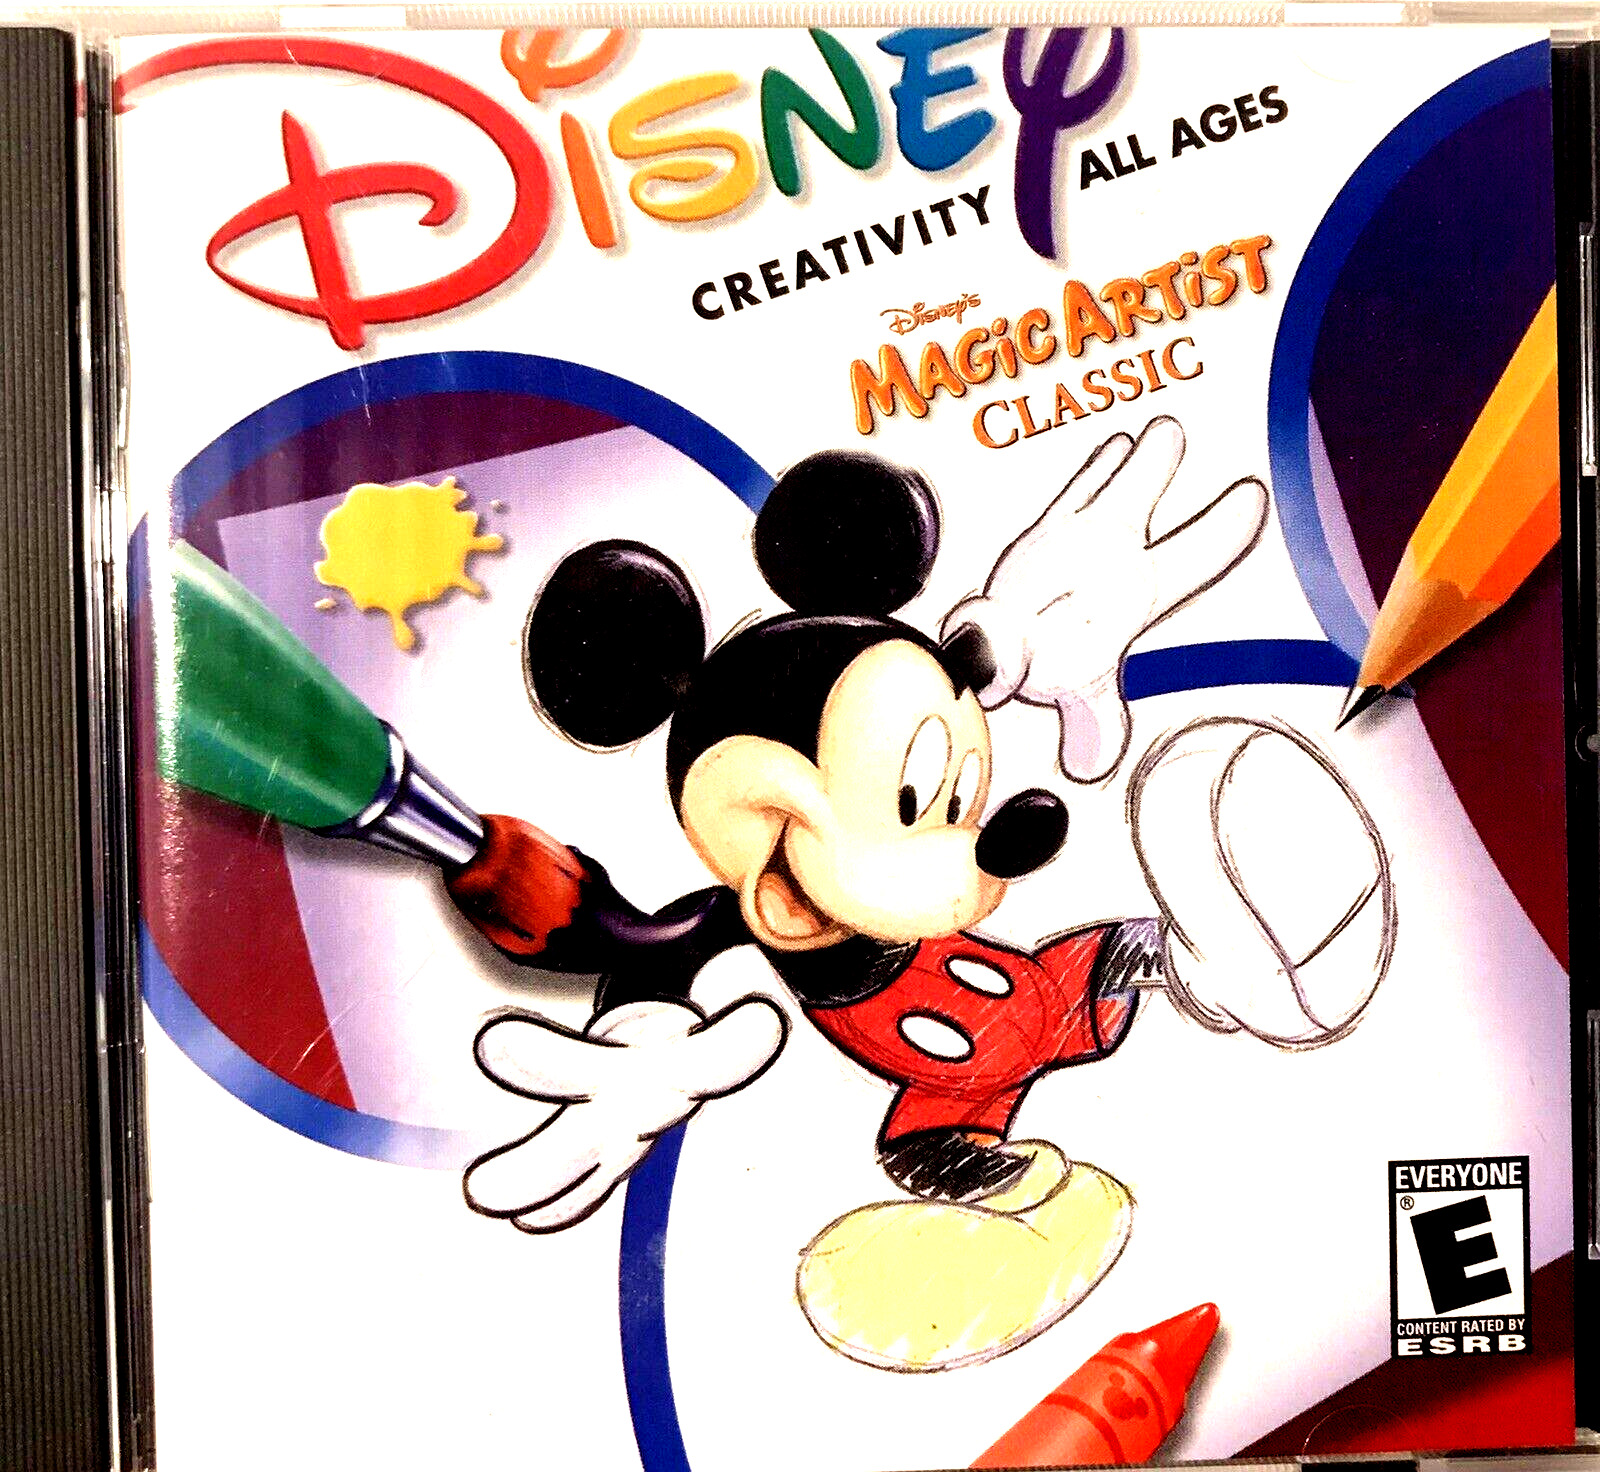 Vintage-Disney Creativity Magic Artist Classic Windows Mac CD-ROM PC